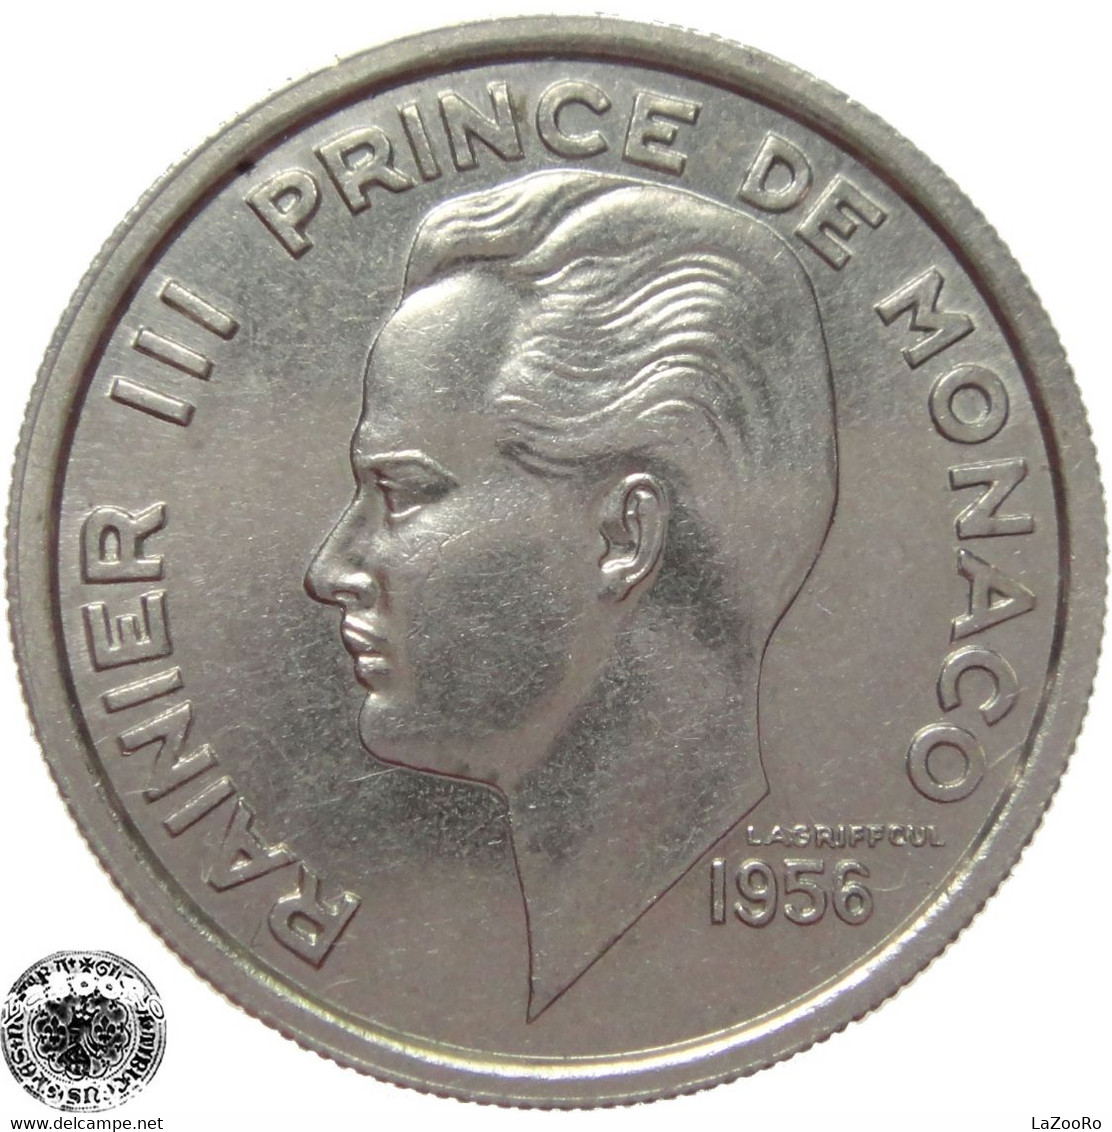 LaZooRo: Monaco 100 Francs 1956 UNC - 1949-1956 Old Francs